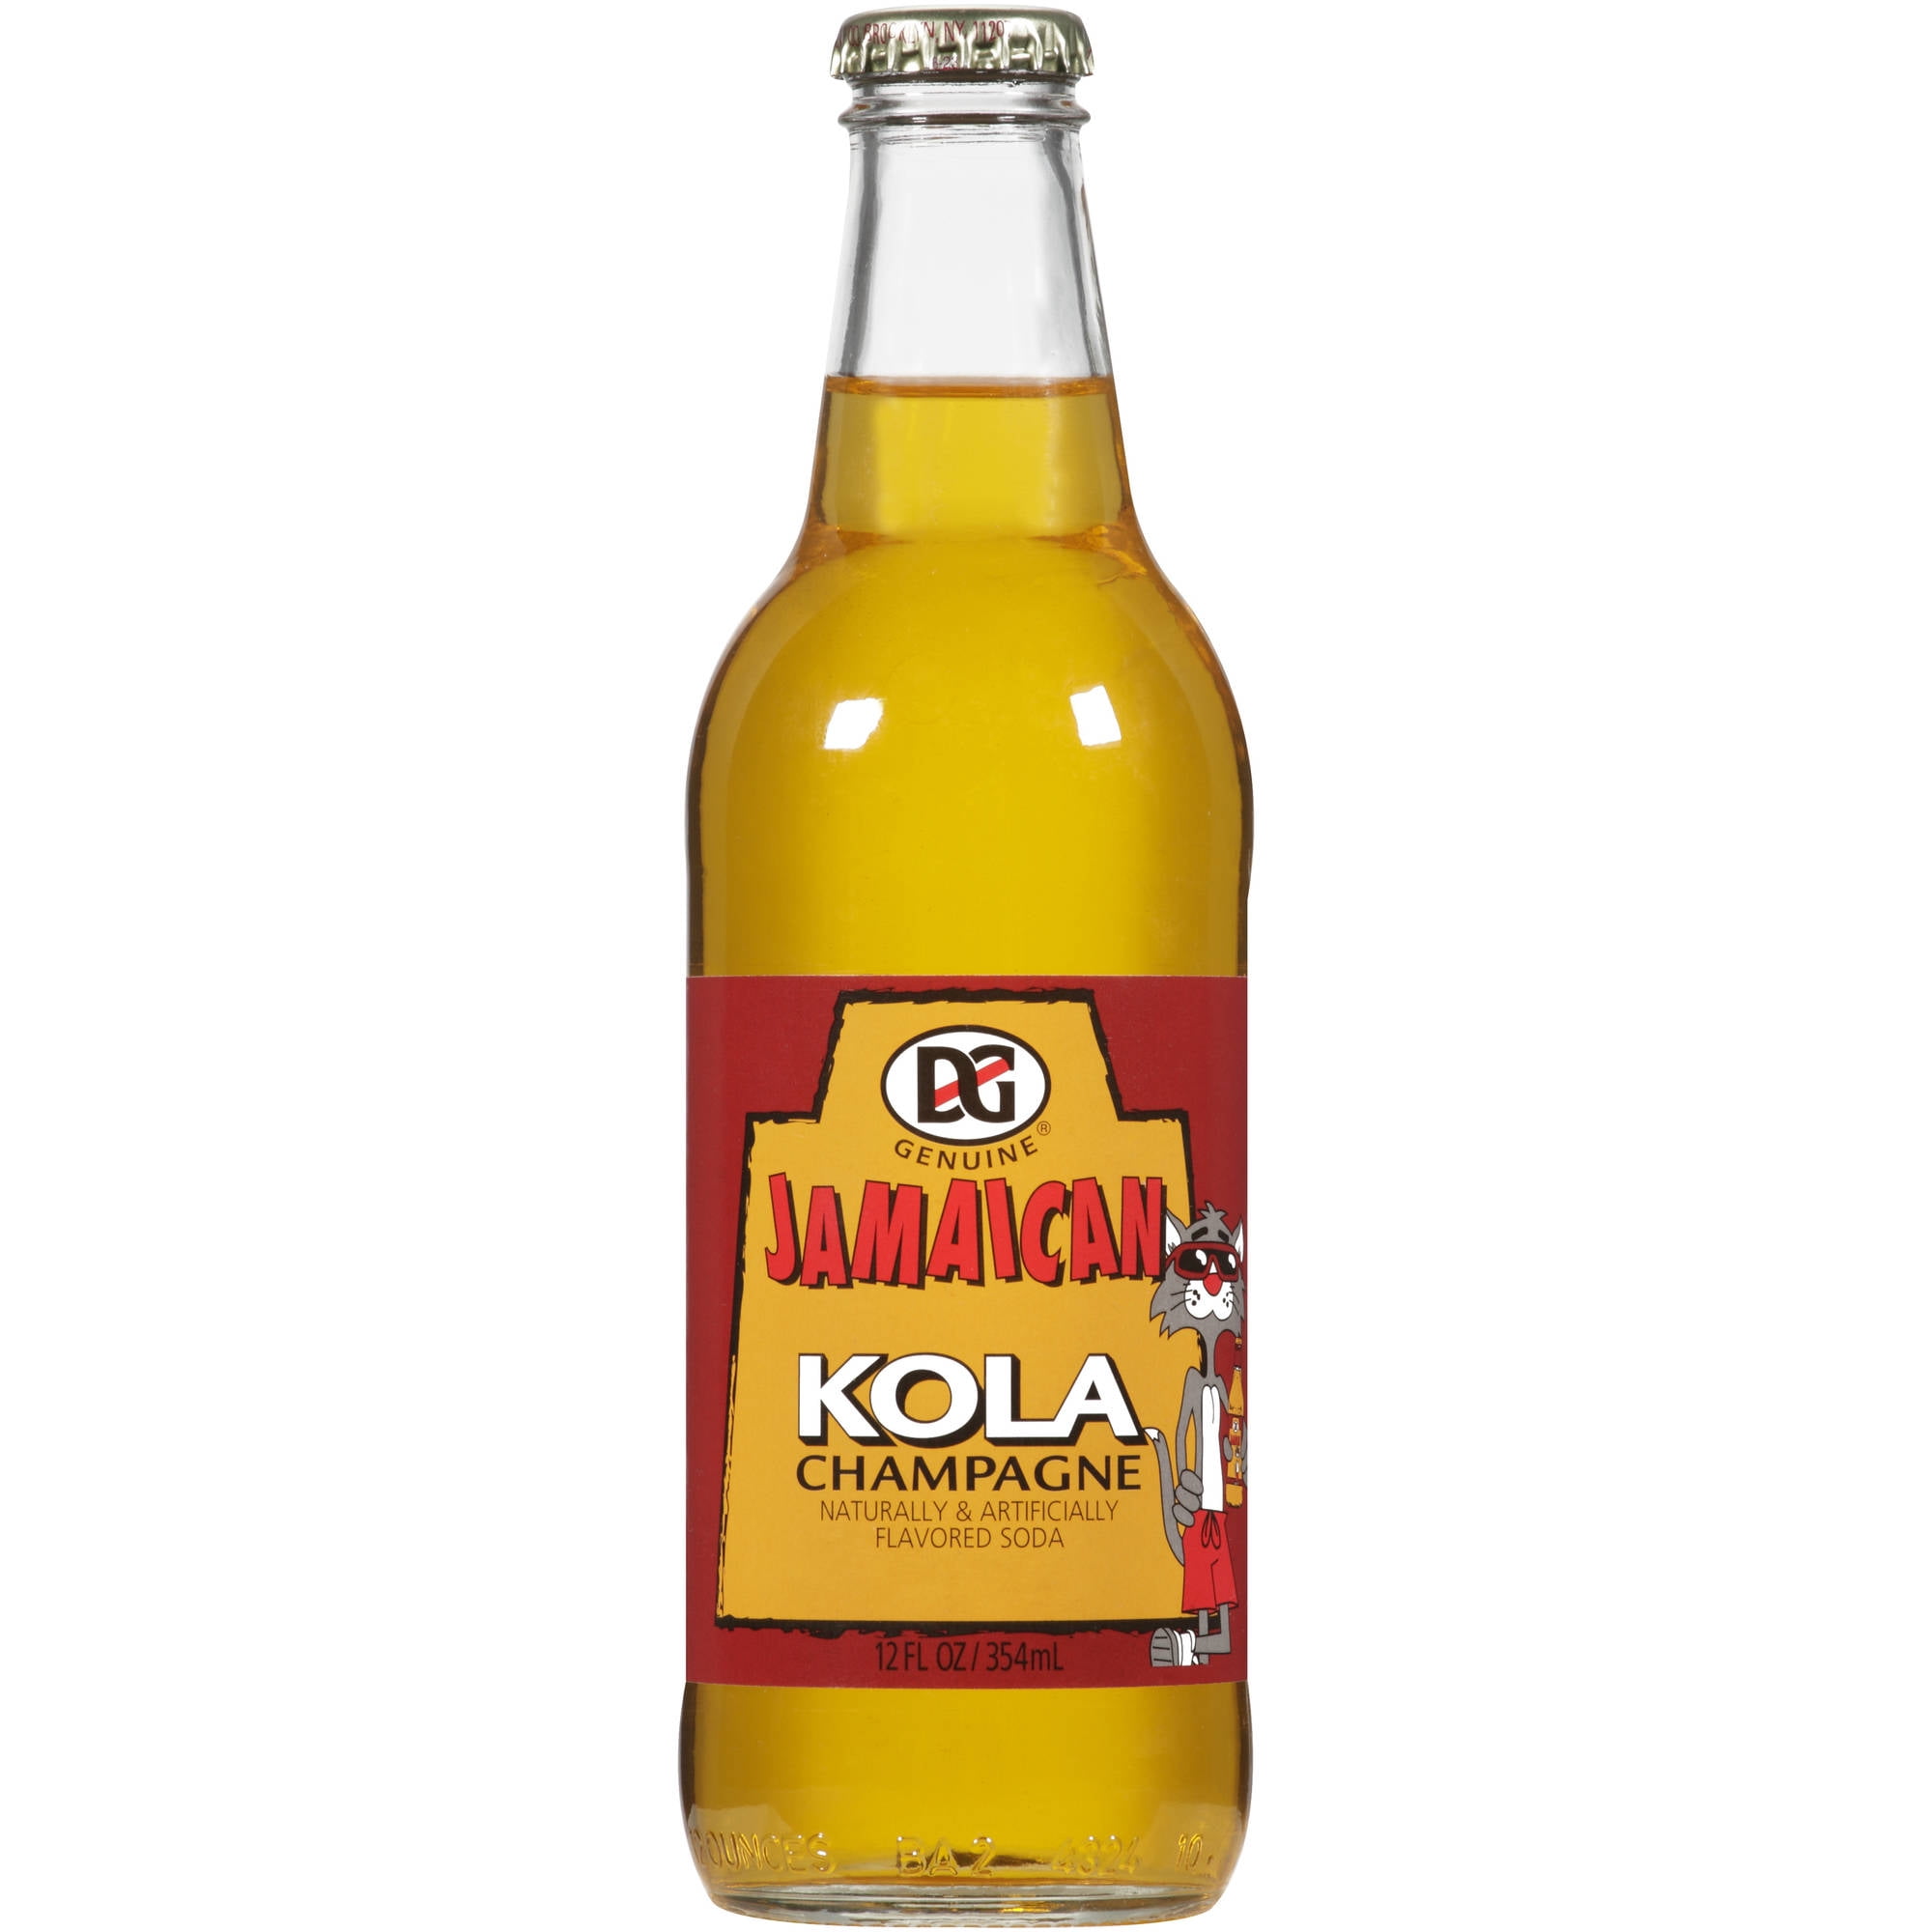 DG Jamaican Kola Champagne Flavored Soda, 12 oz